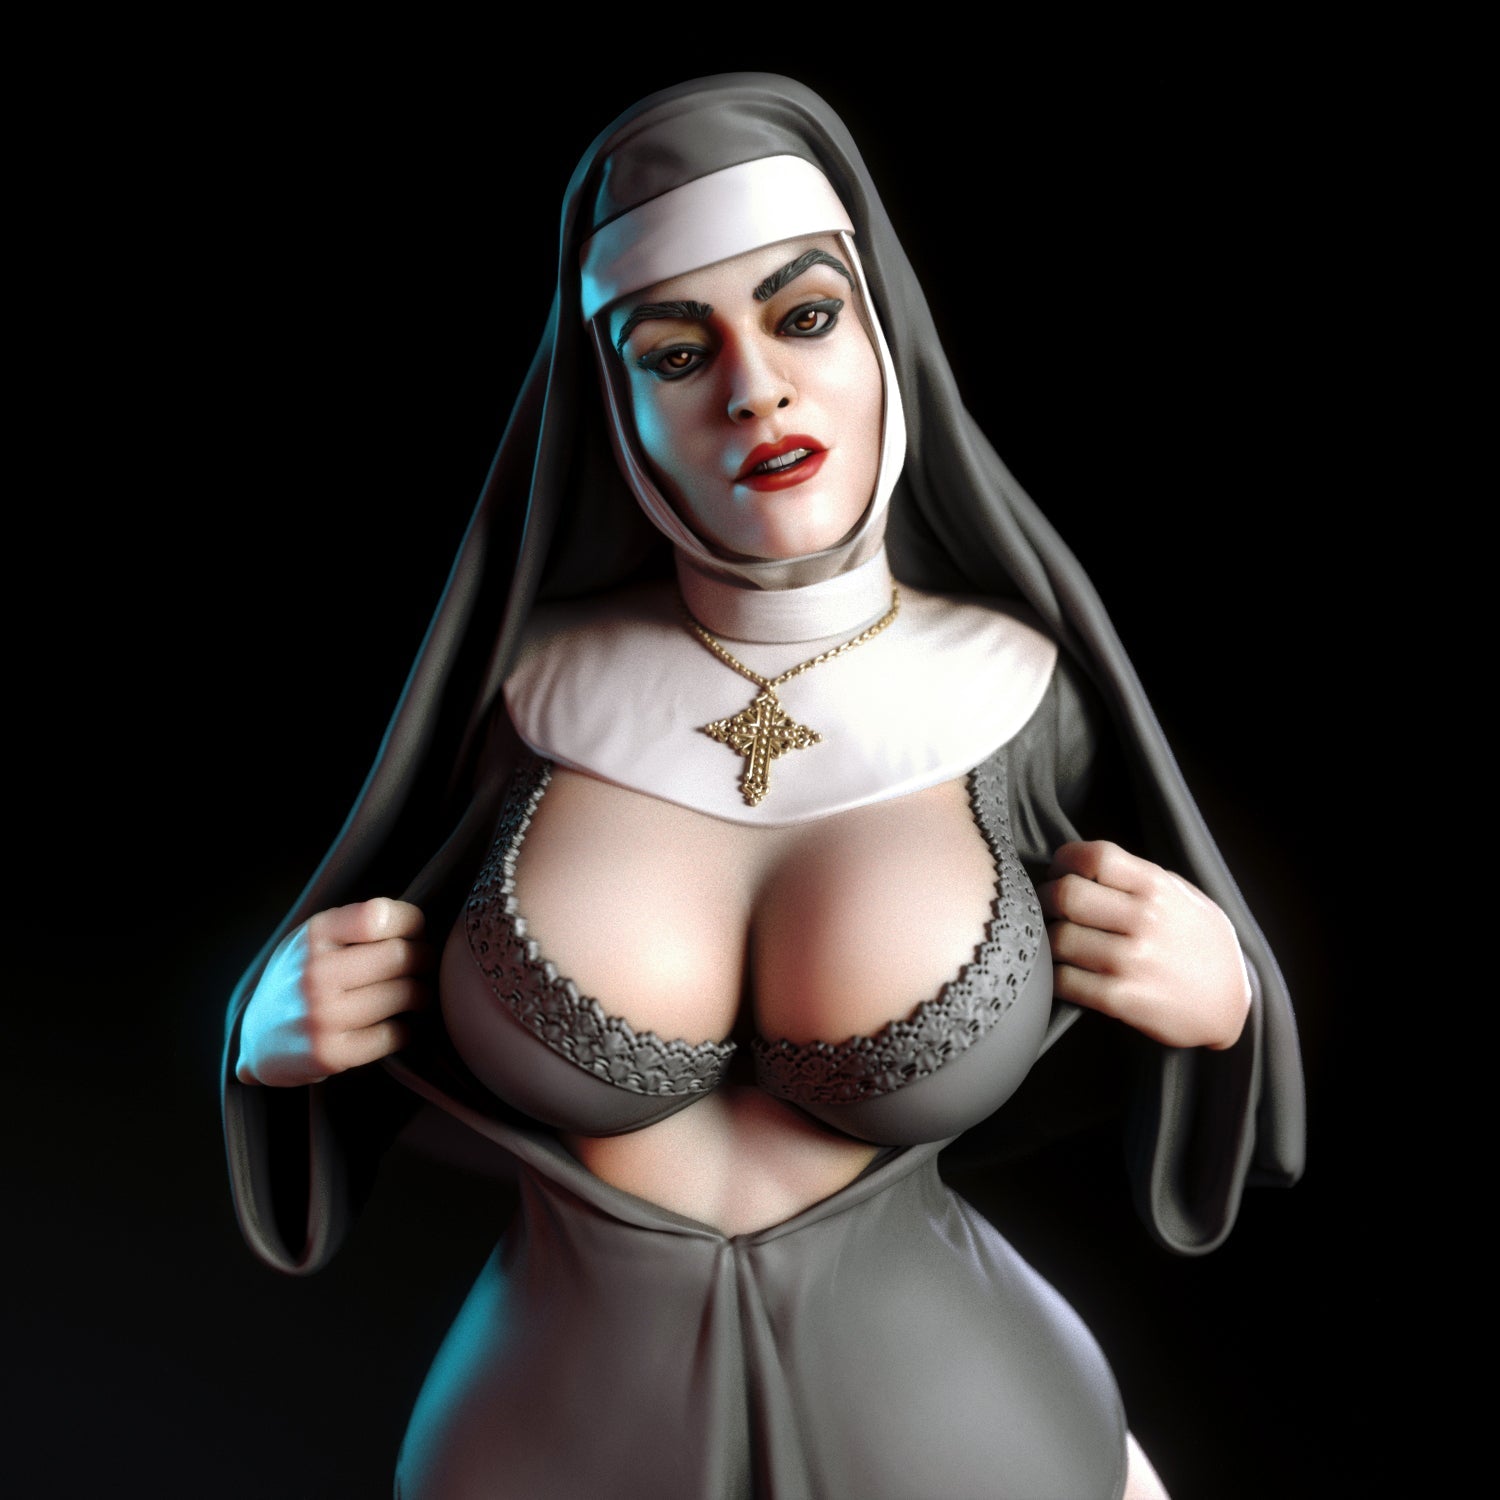 Beata a sexy nun Pin-Up 3d Printed miniature FanArt by Torrida